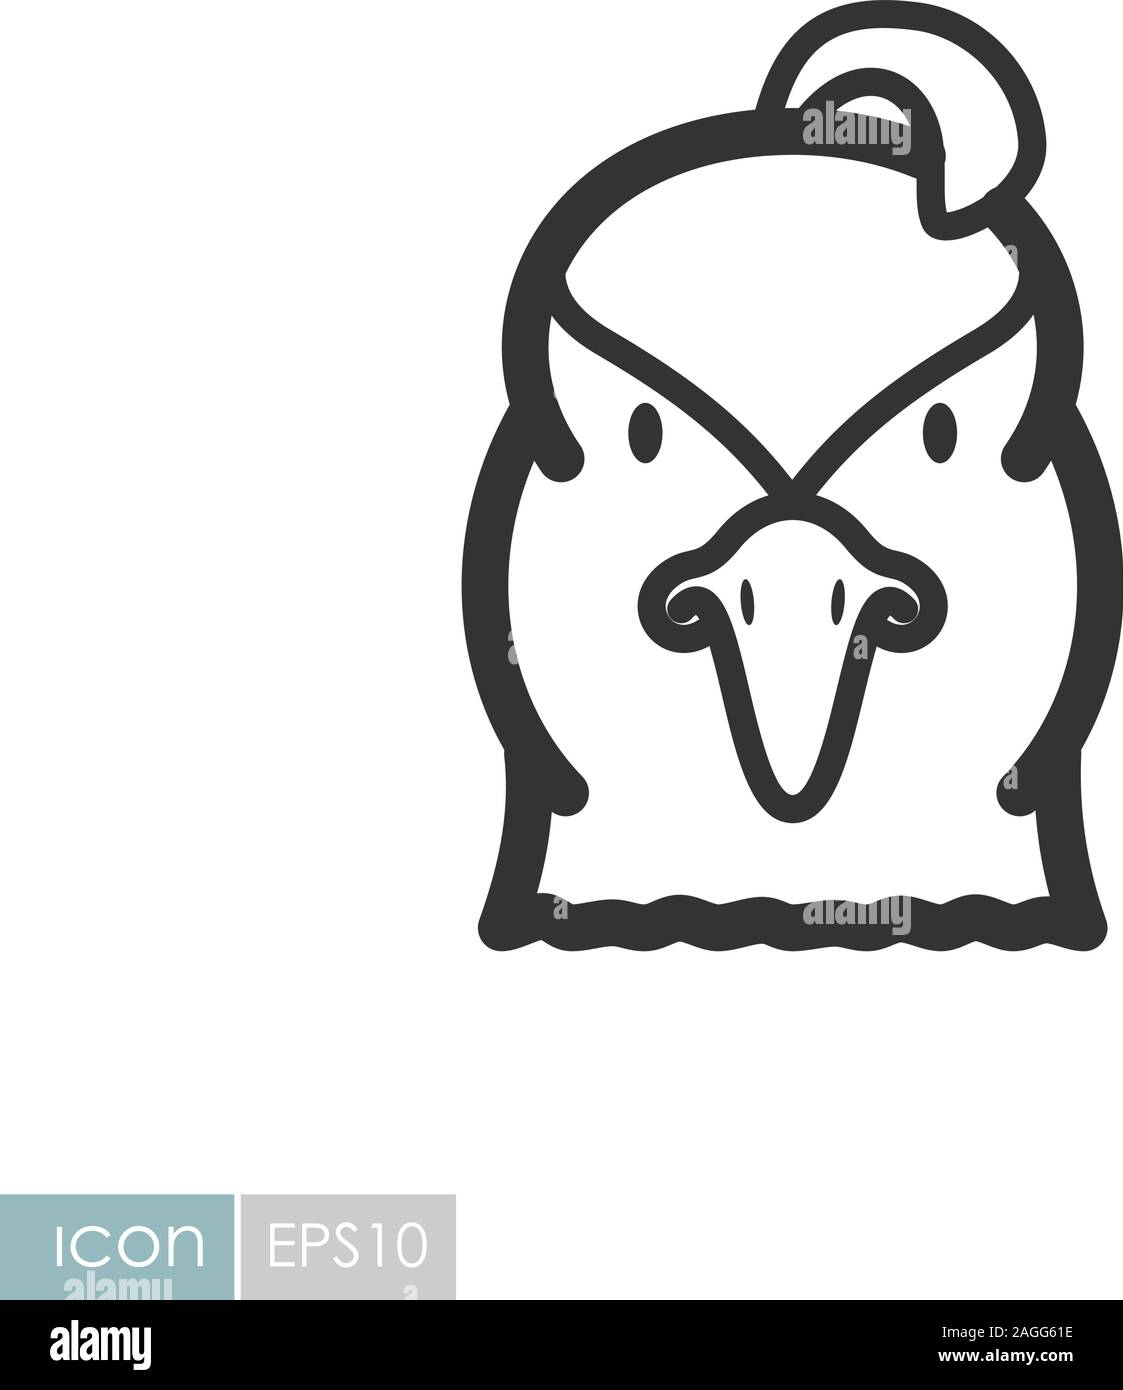 Quail icon. Animal head vector symbol eps 10 Stock Vector Image & Art ...